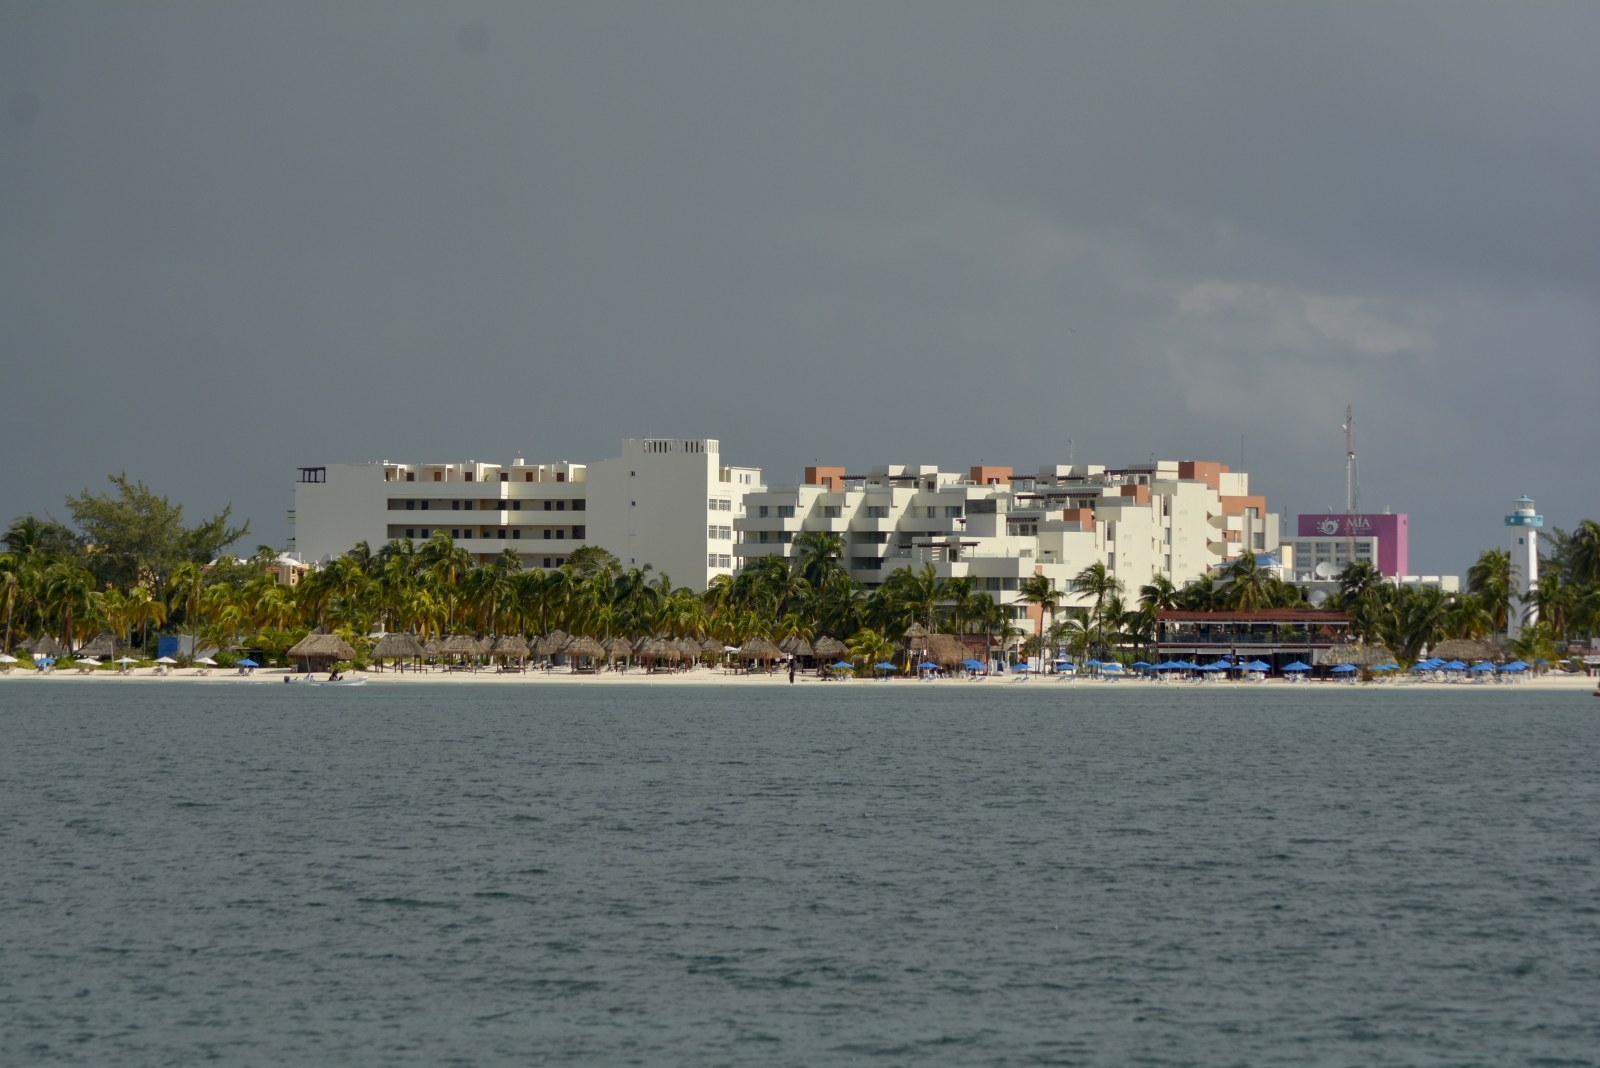 Hoteleros minimizan escasez de agua en Isla Mujeres; aseguran tener plantas desalinizadoras